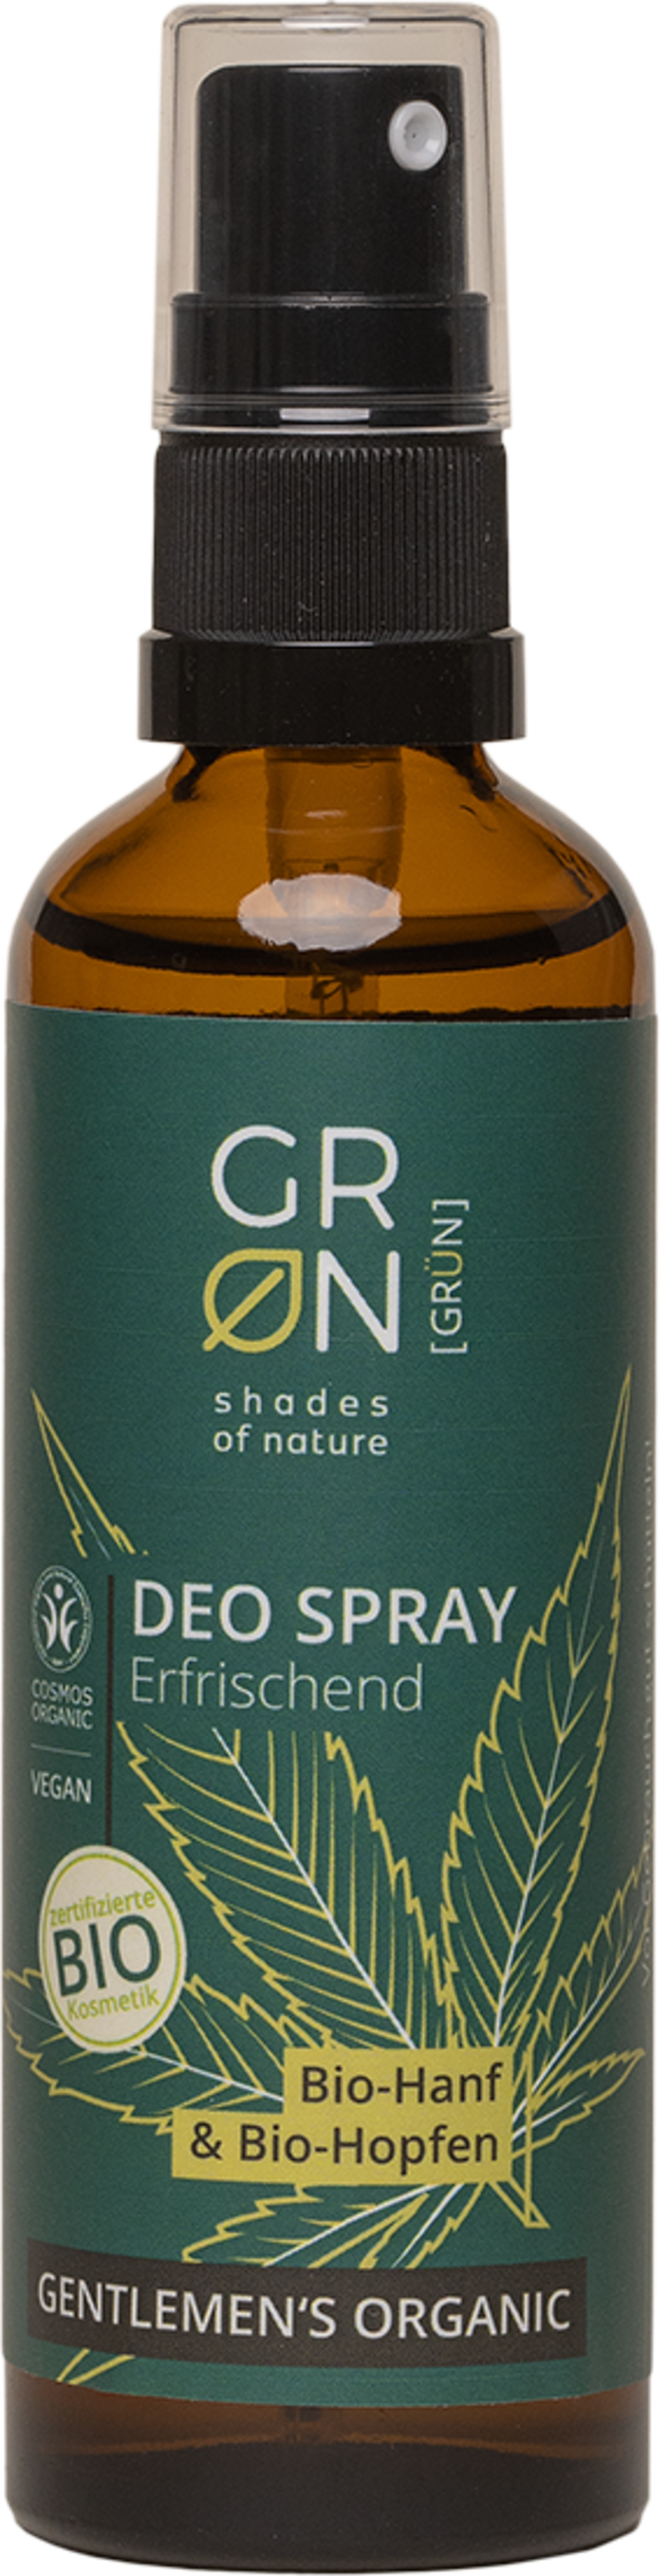 GRN [GREEN] Deo Spray Refreshing